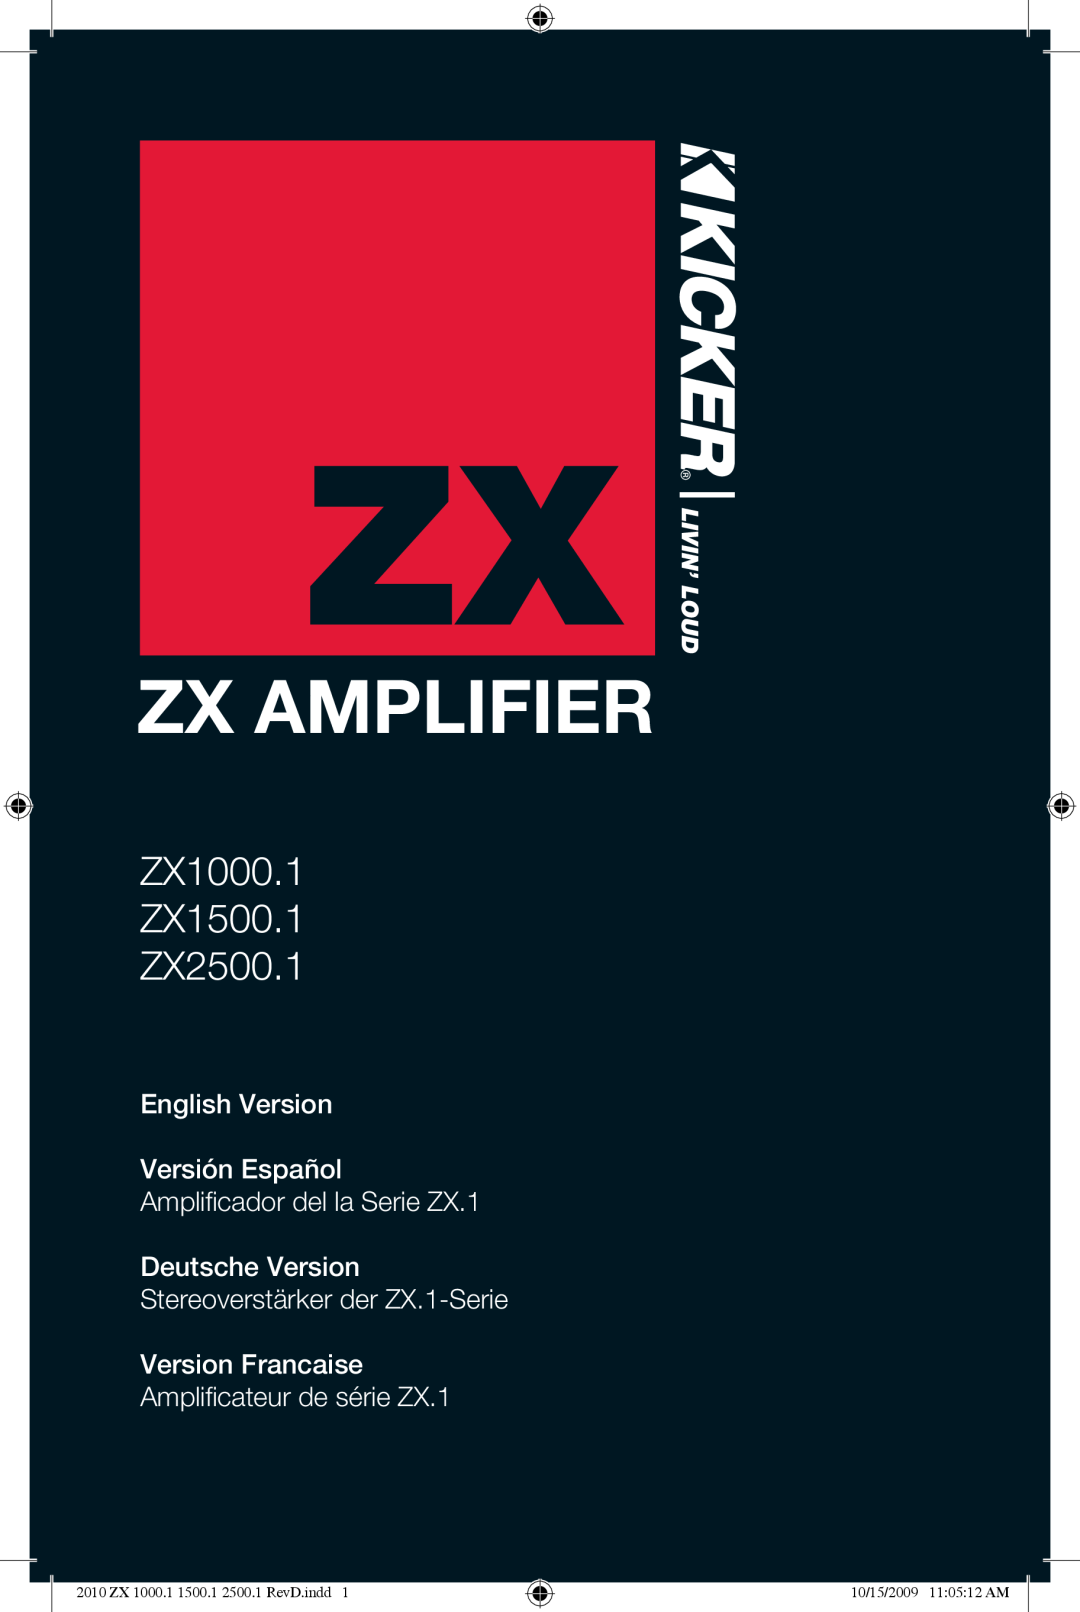 Kicker manual Zx Amplifier, ZX1000.1 ZX1500.1 ZX2500.1, English Version Versión Español, Amplificateur de série ZX.1 